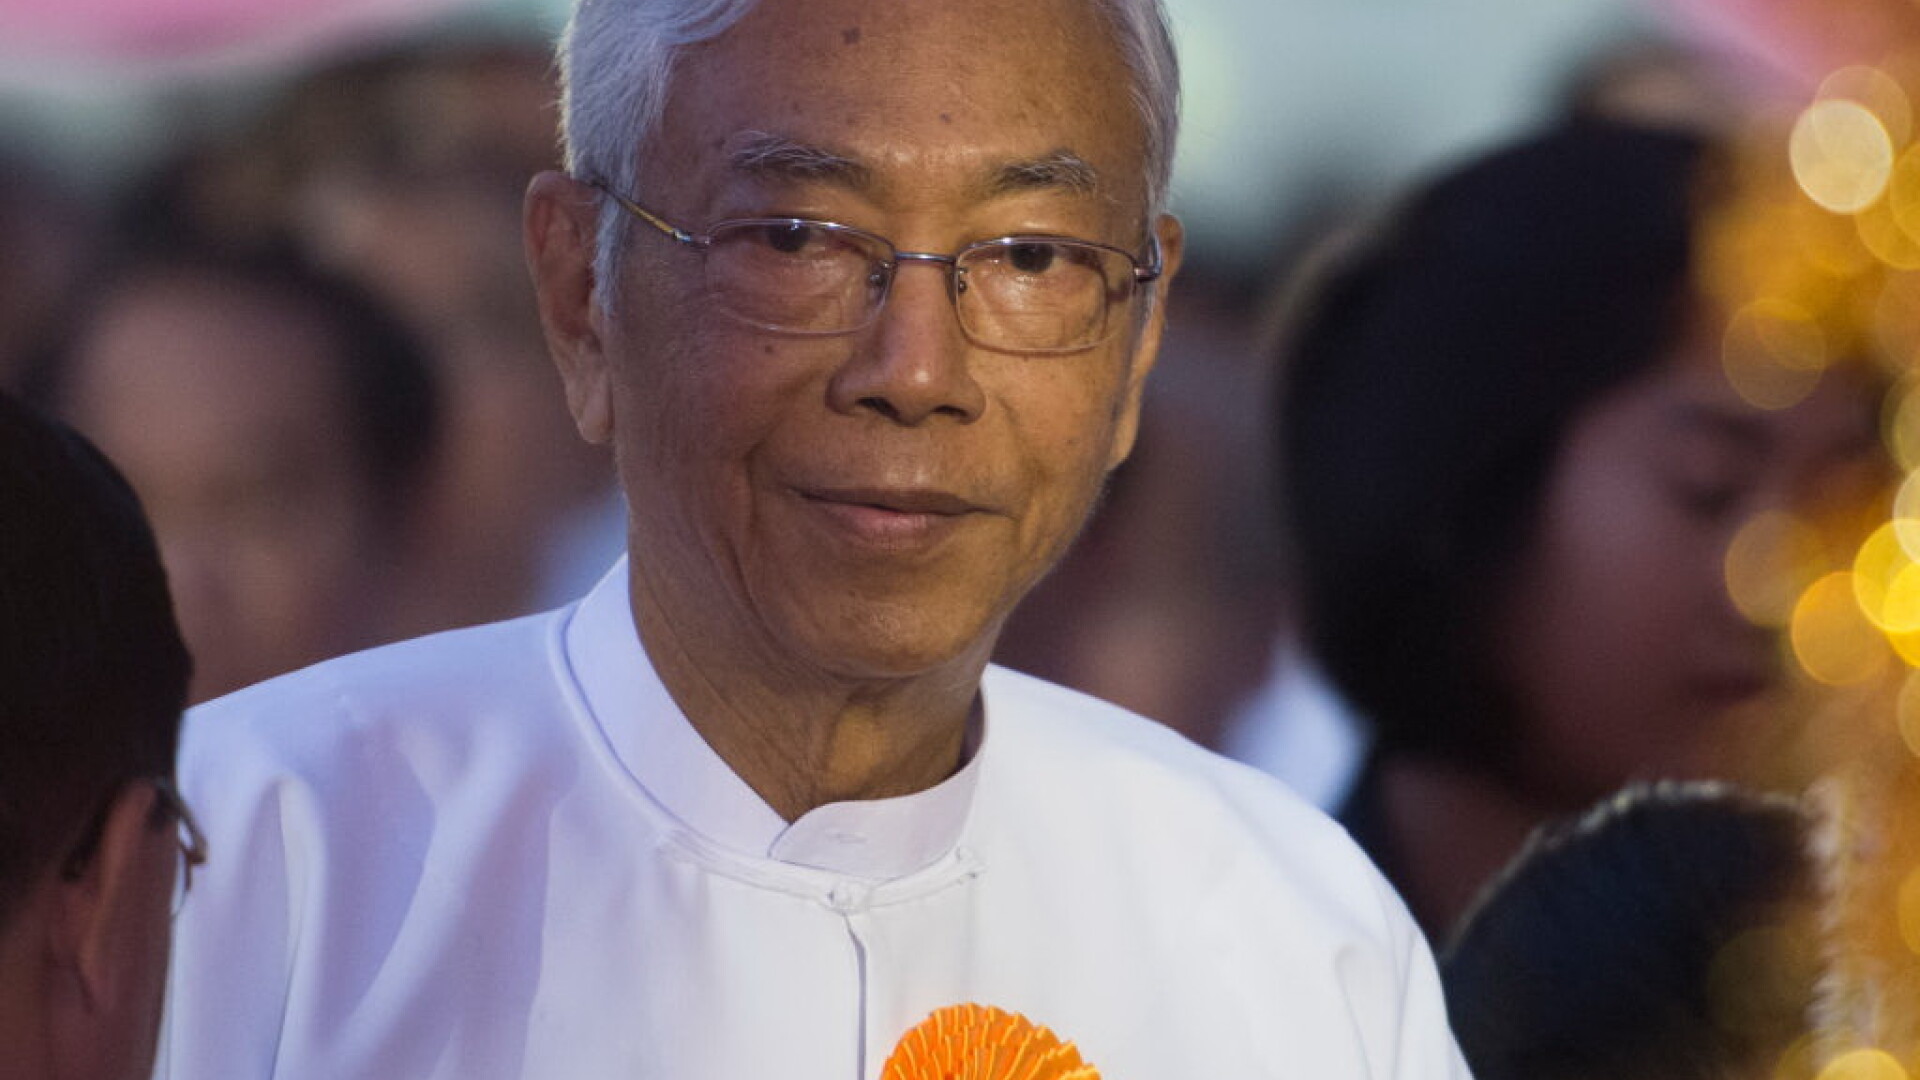 Htin Kyaw, președinte Myanmar